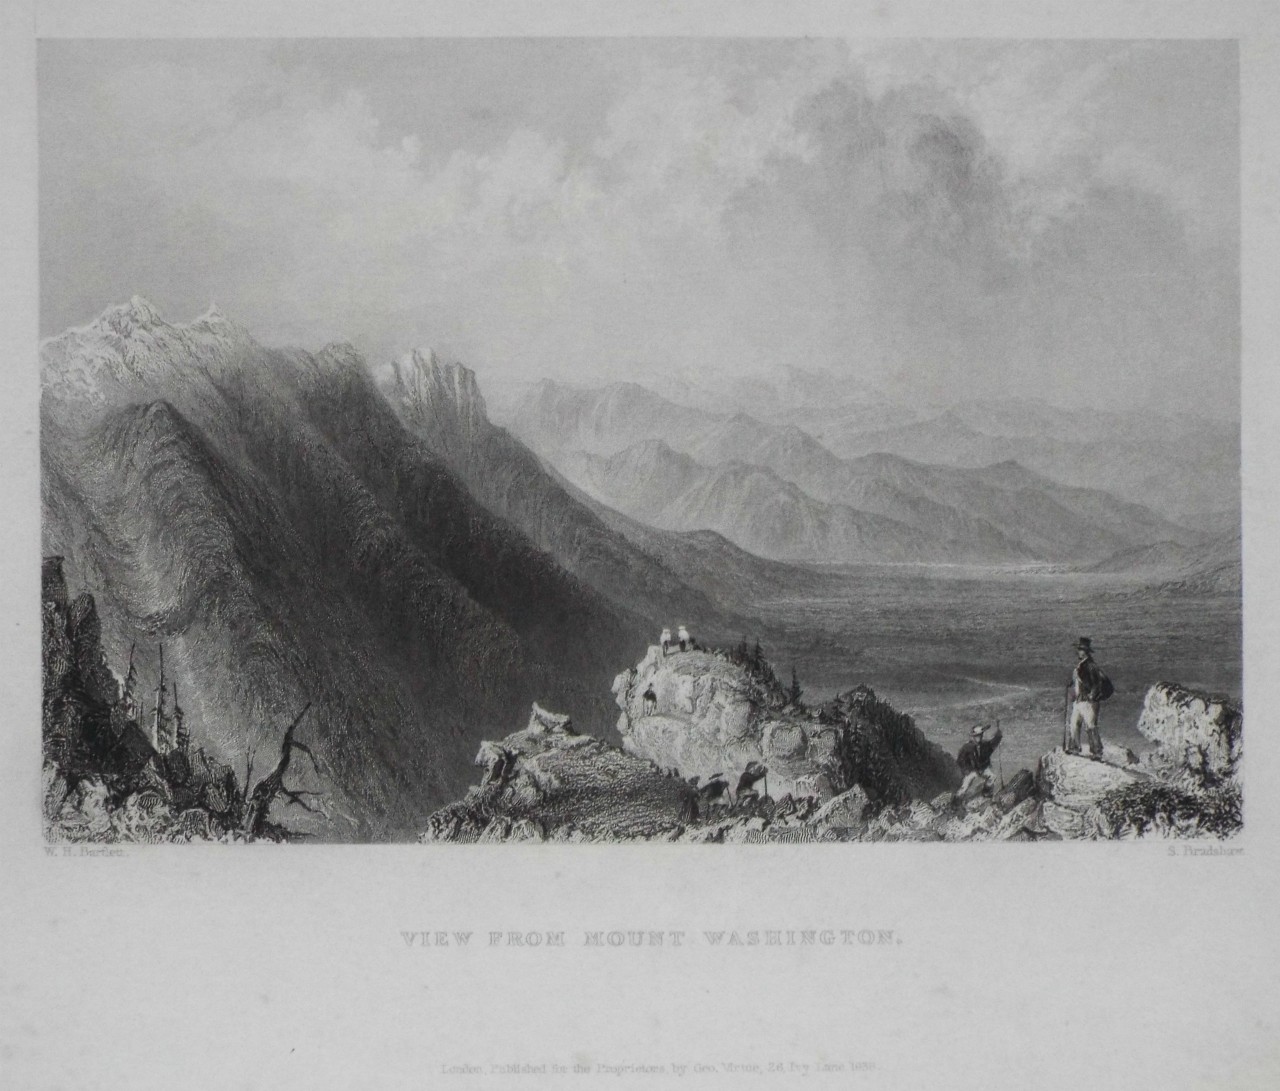 Print - View from Mount Washington. - Bradshaw